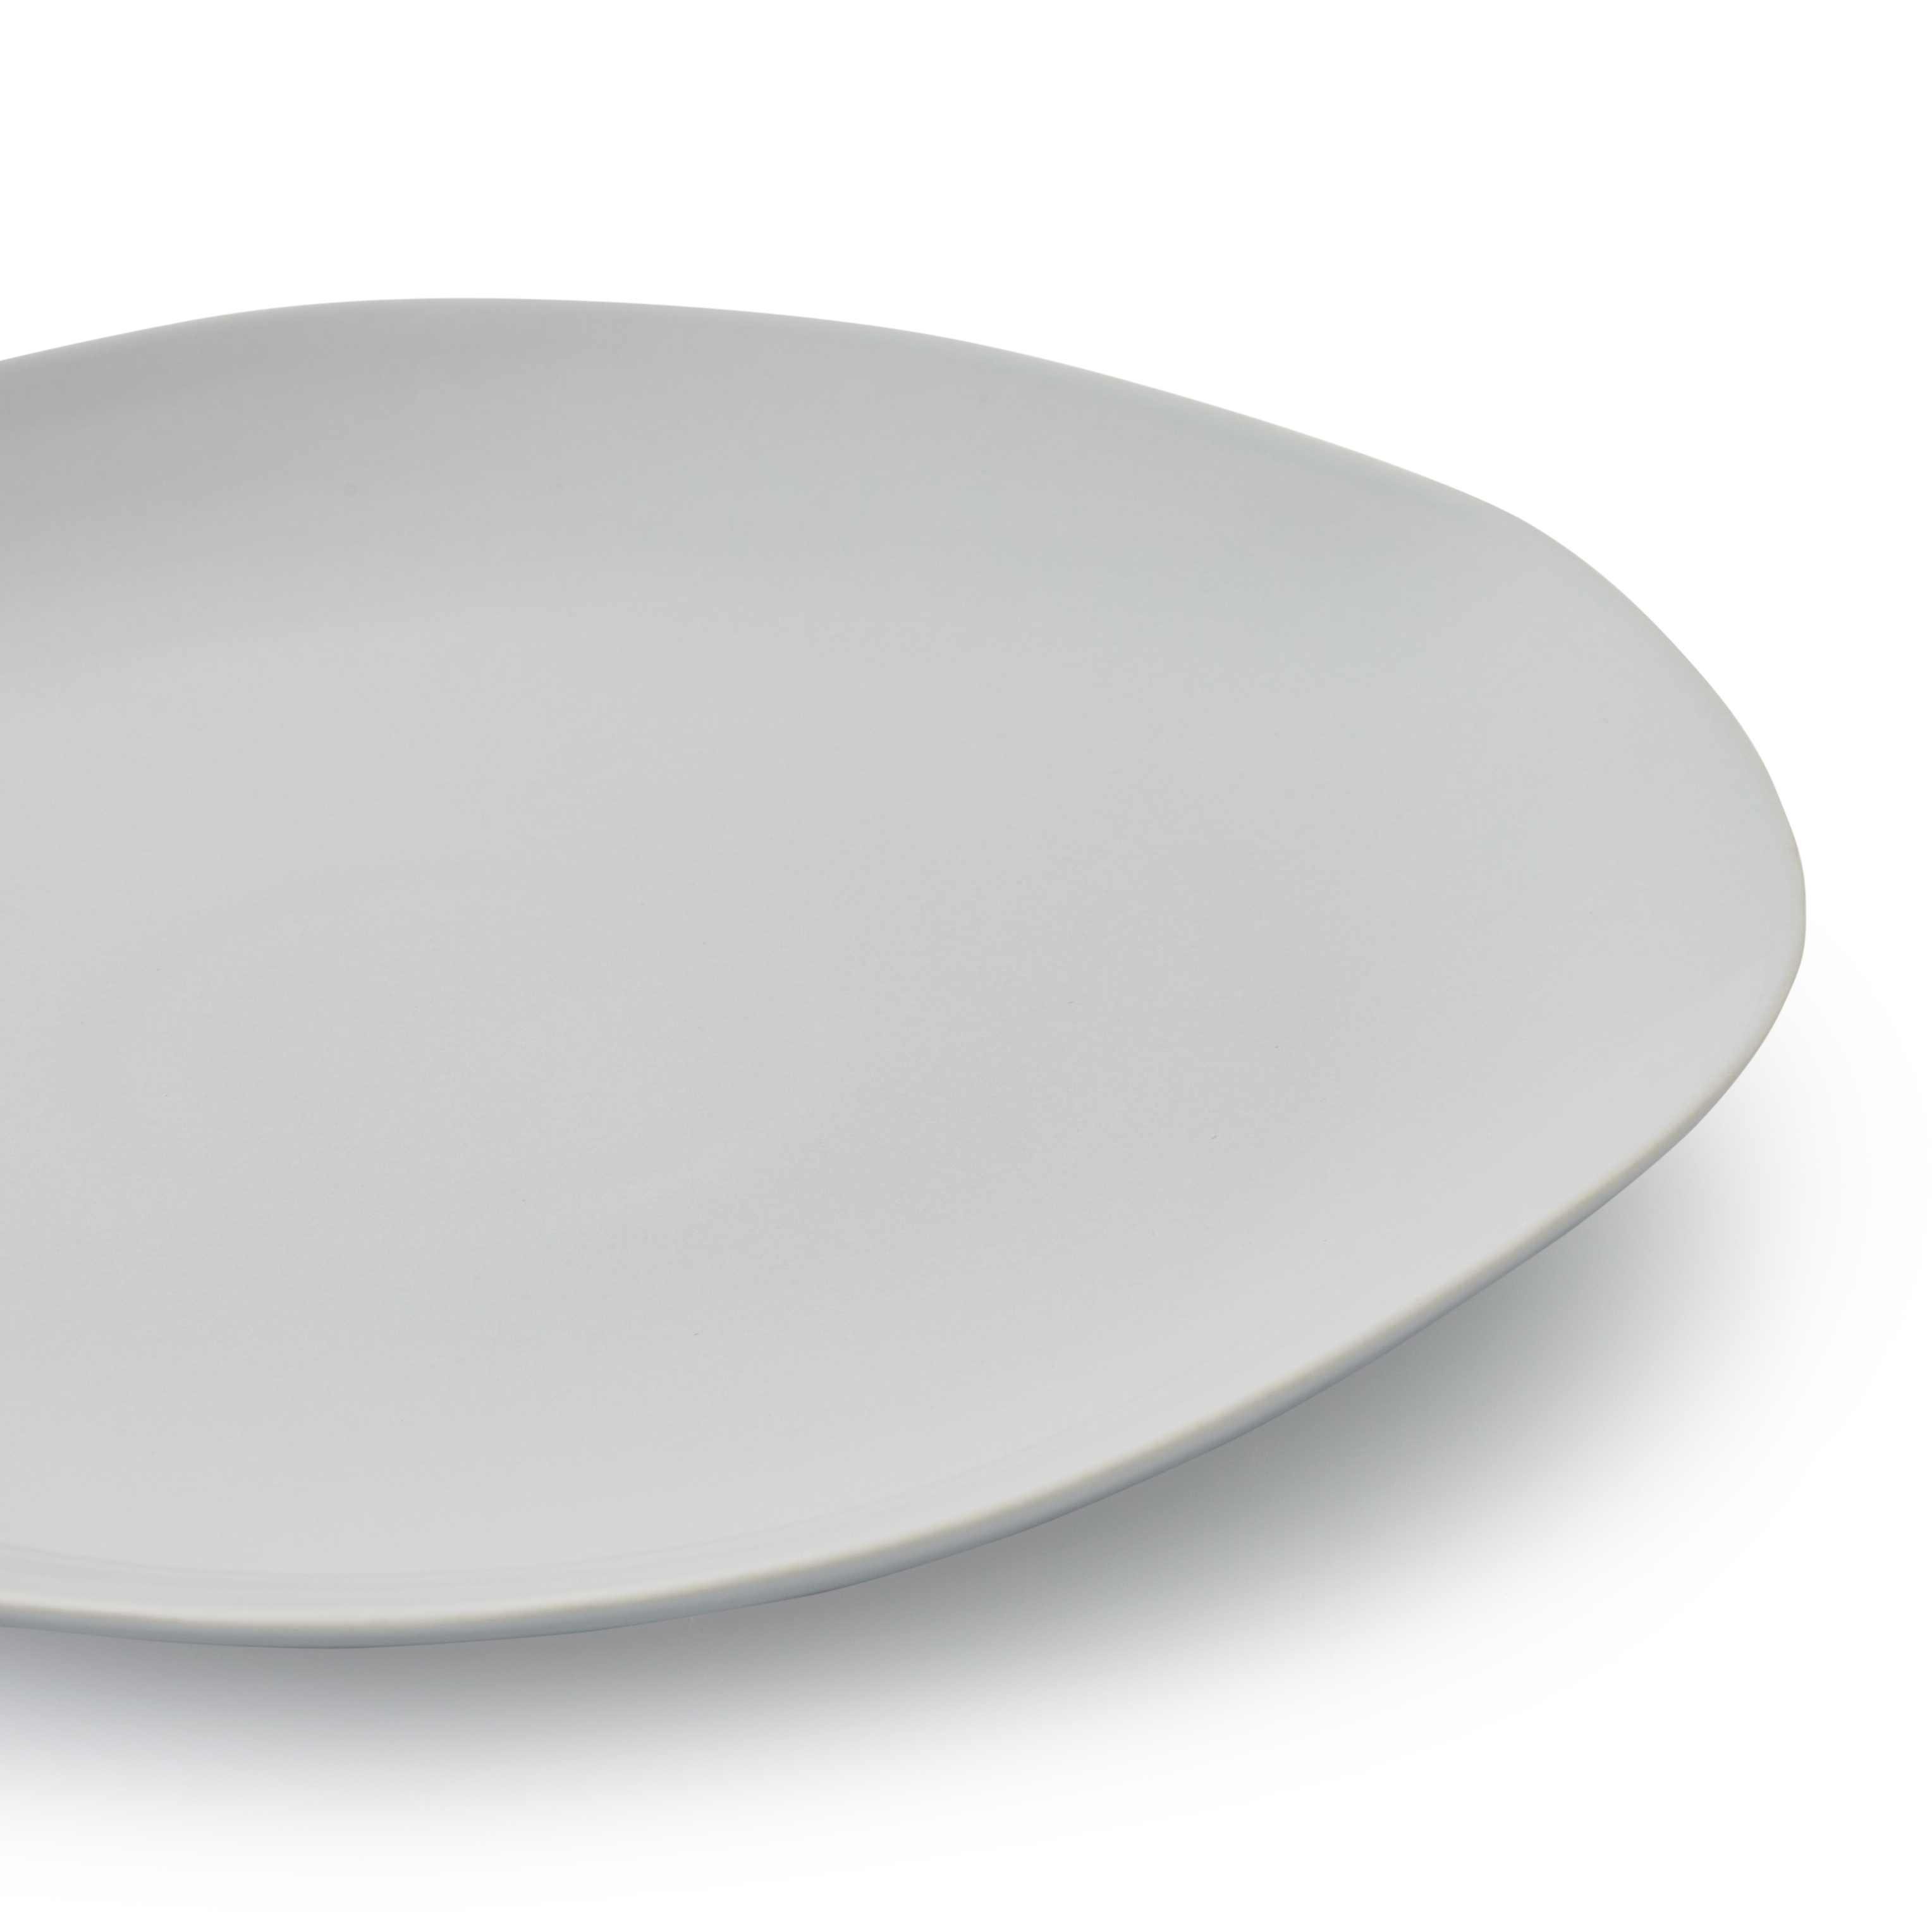 Sophie Conran Arbor 4 Dinner Plates, Grey image number null